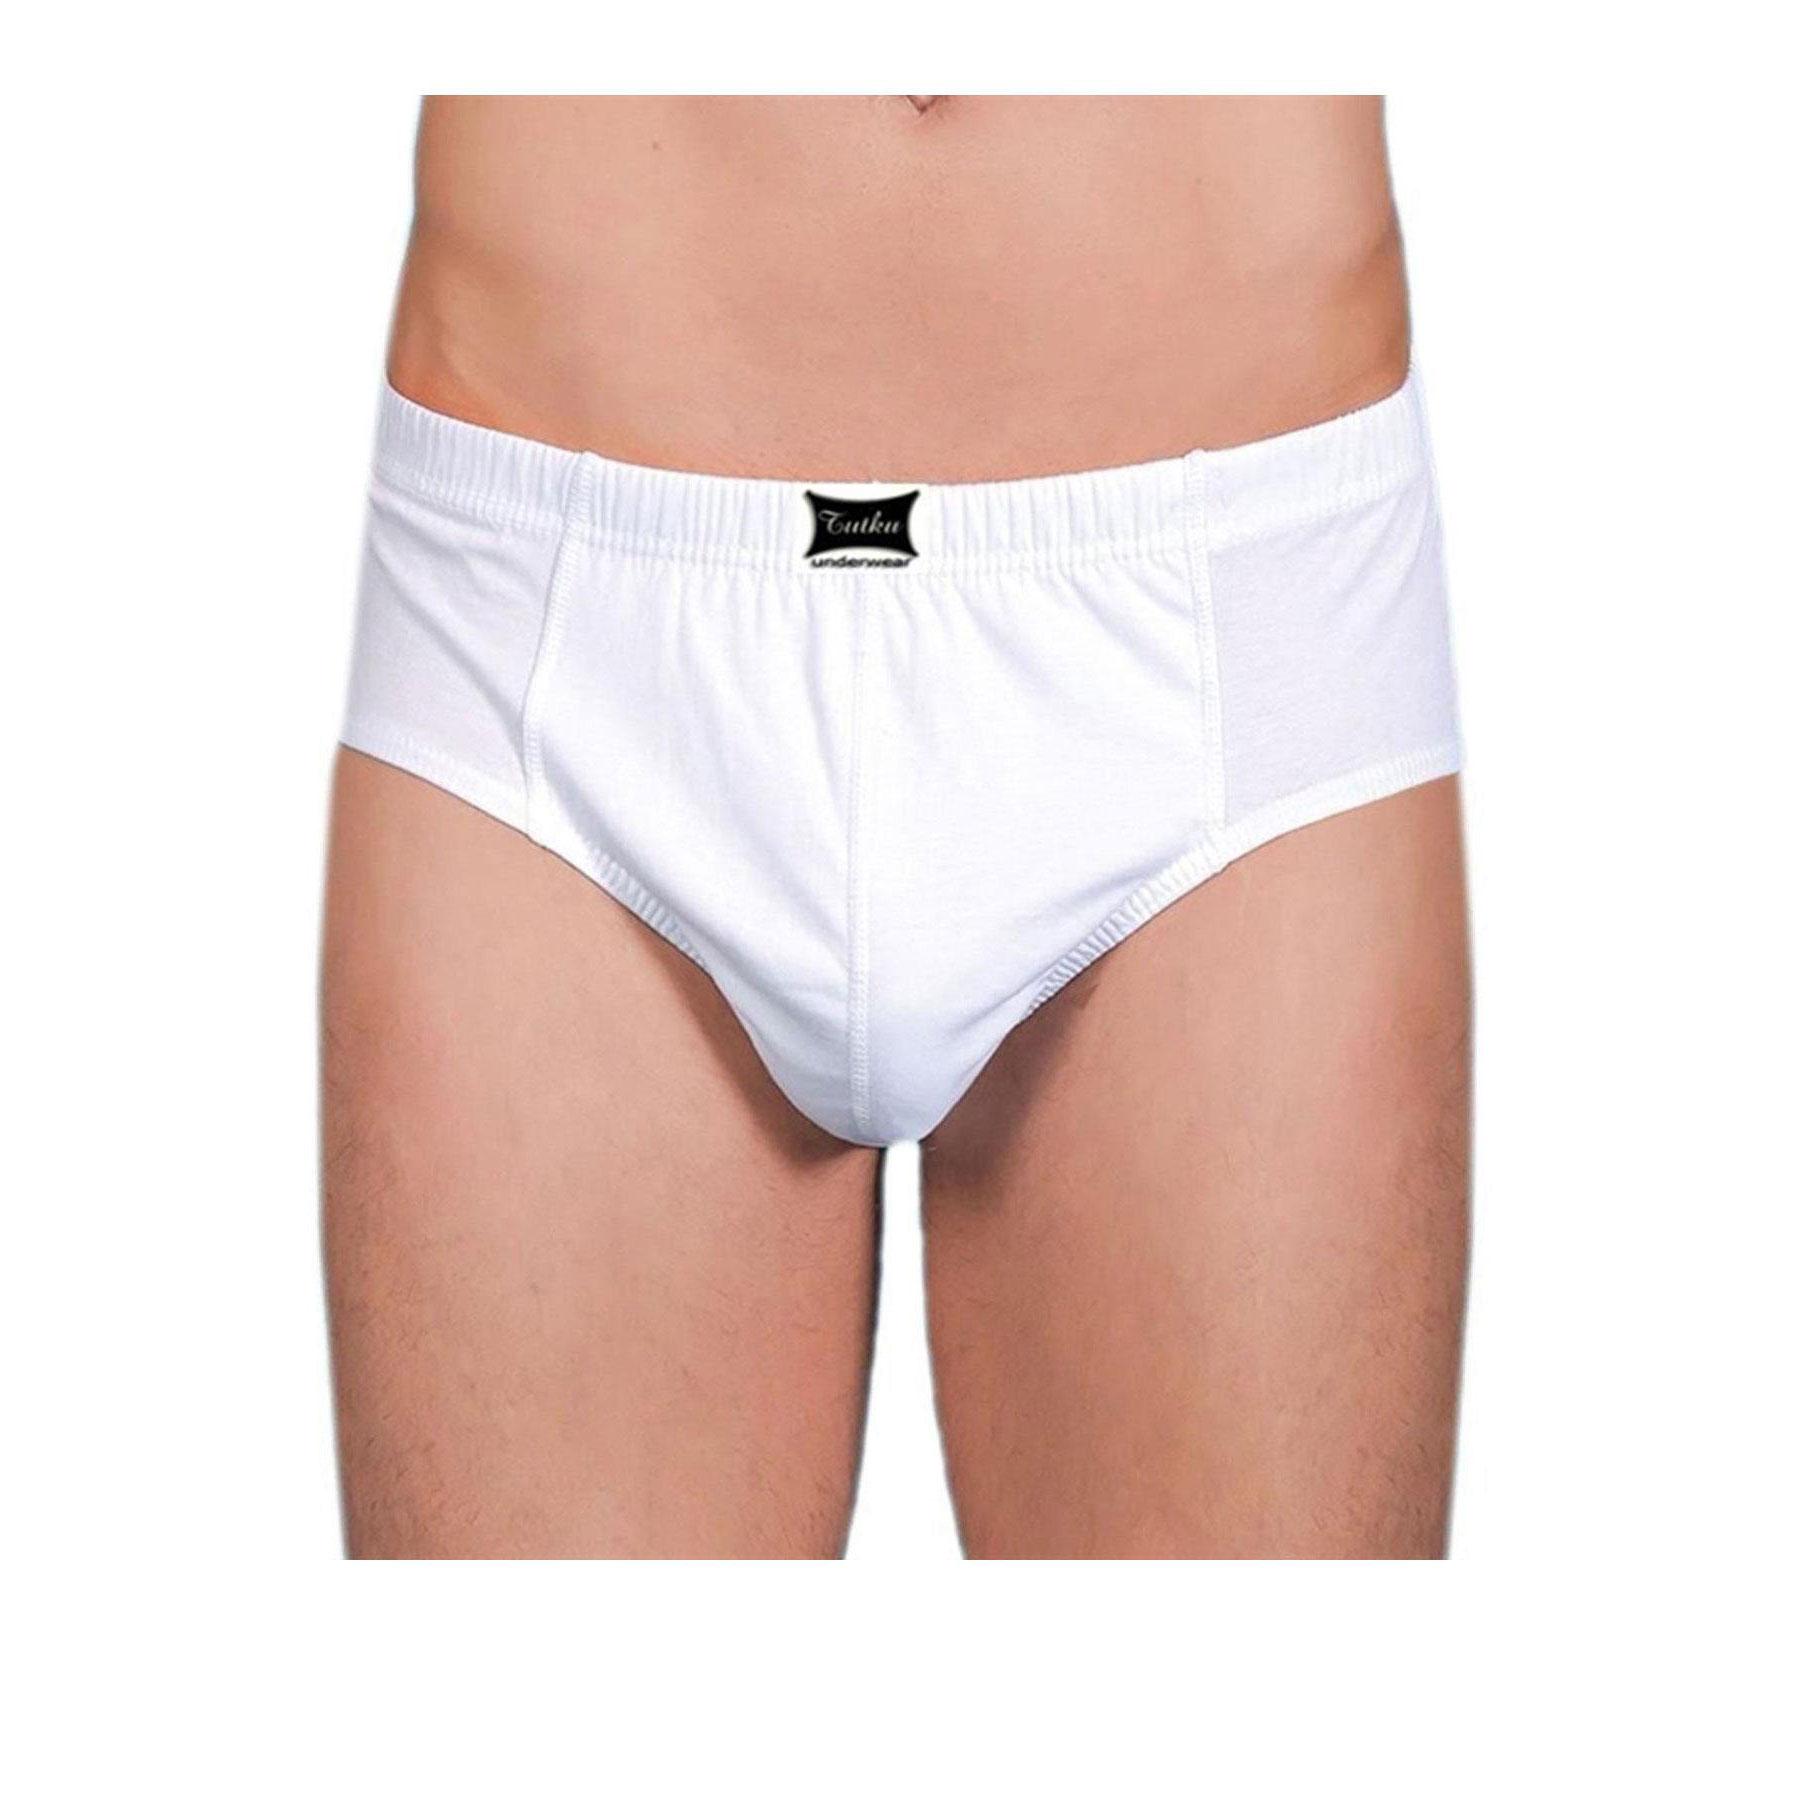 Hepsine Rakip Tutku Underwear Cotton Men's Slip Underpants 6 Pack